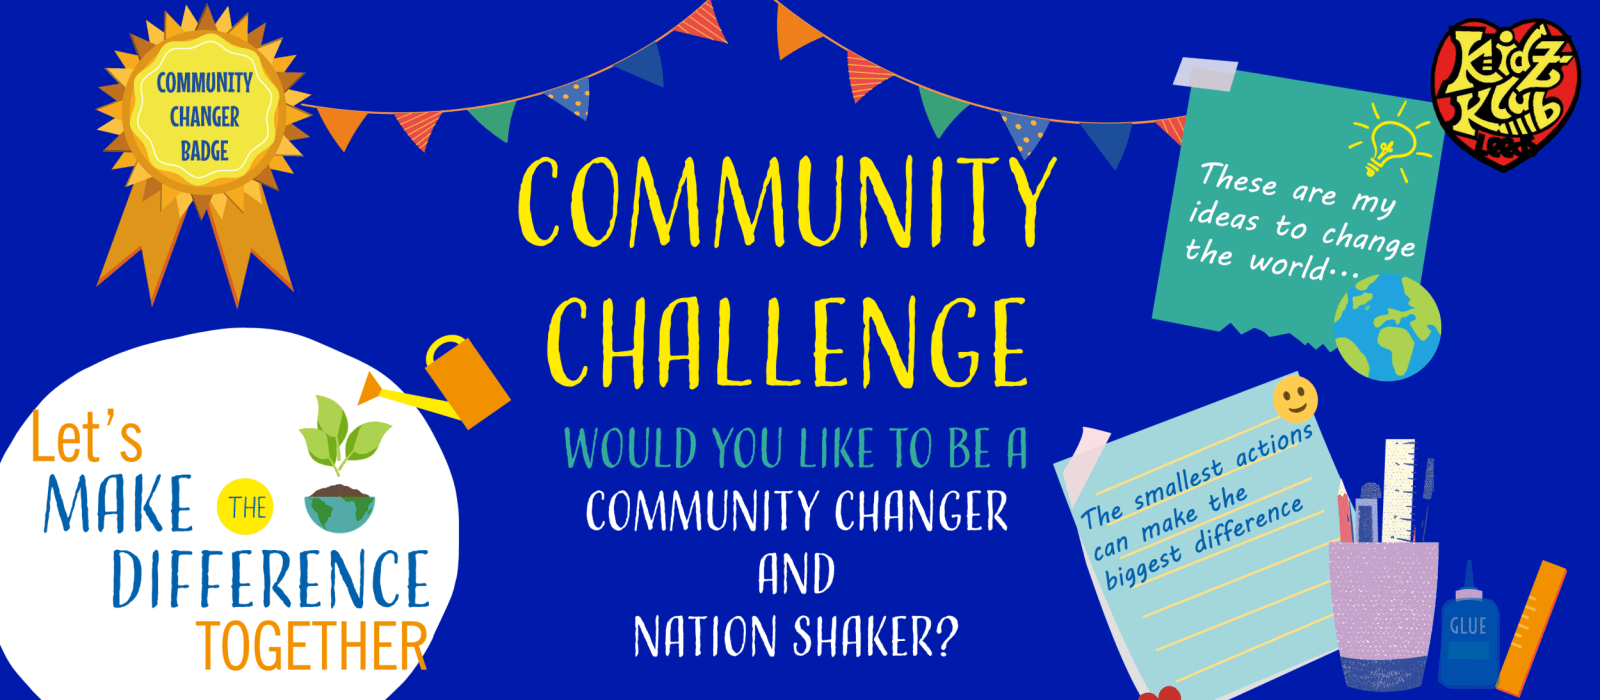 Community challenge